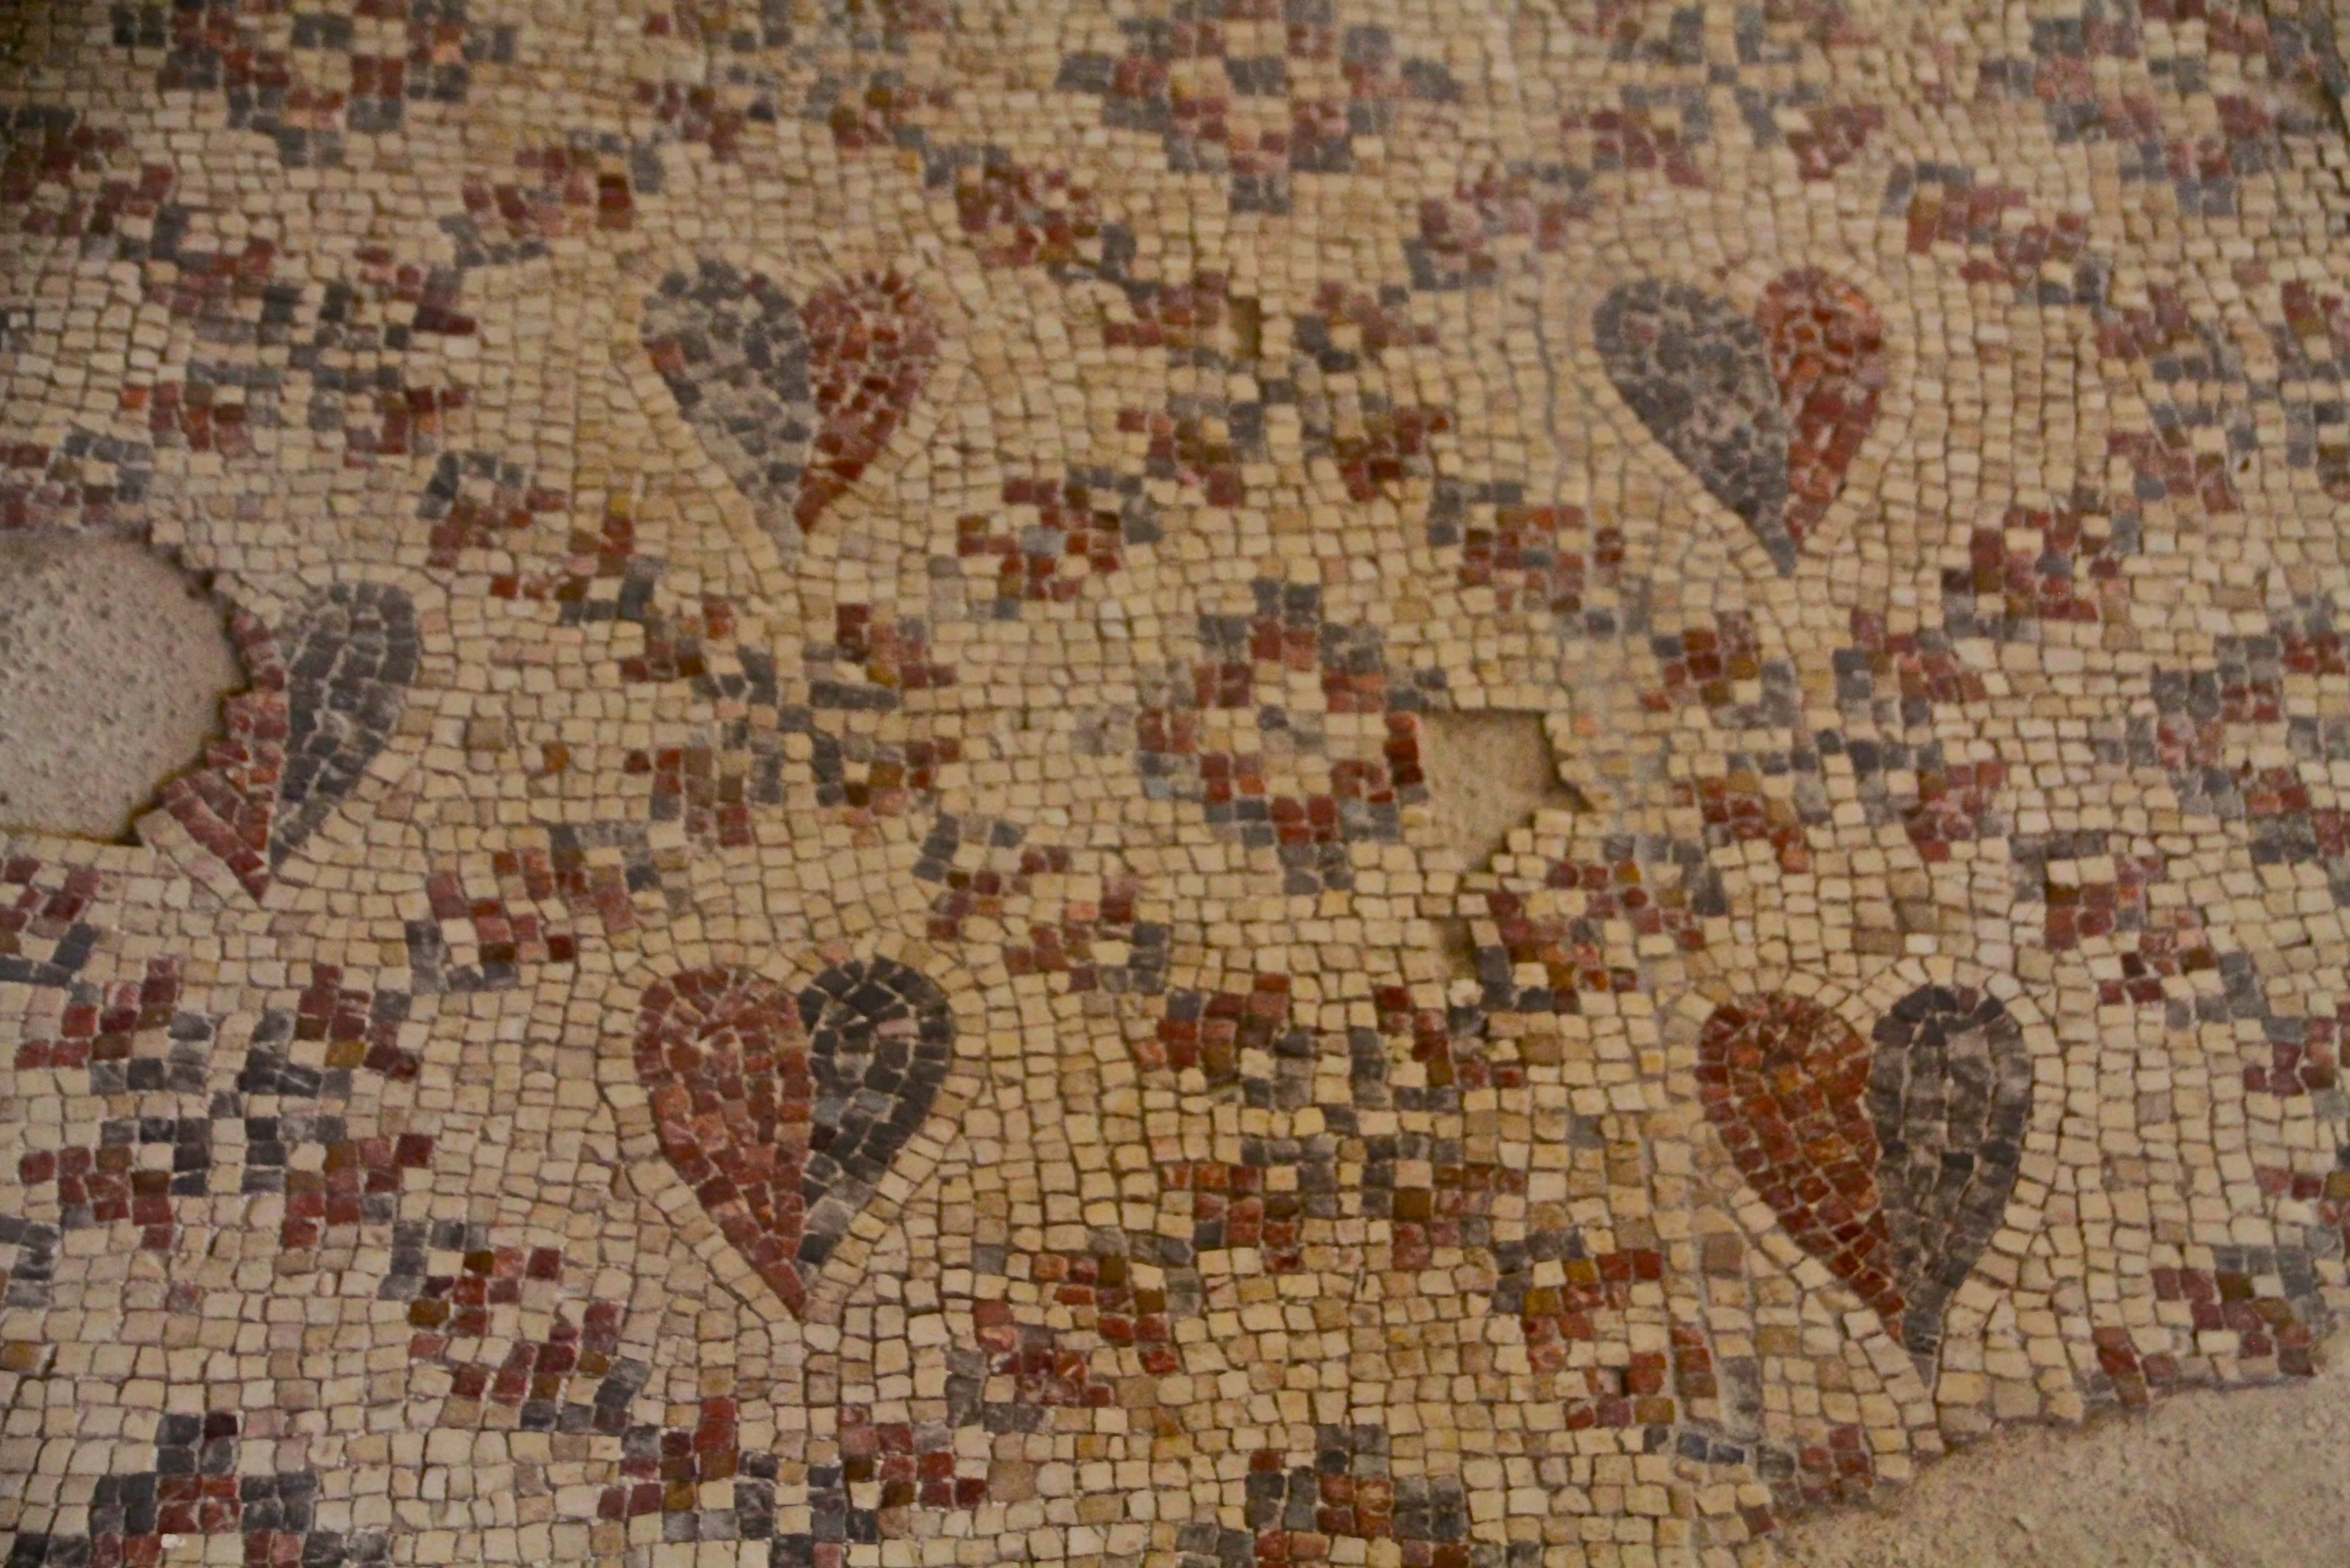 The mosaic at the Shalom Al Yisrael synagogue in Jericho. 